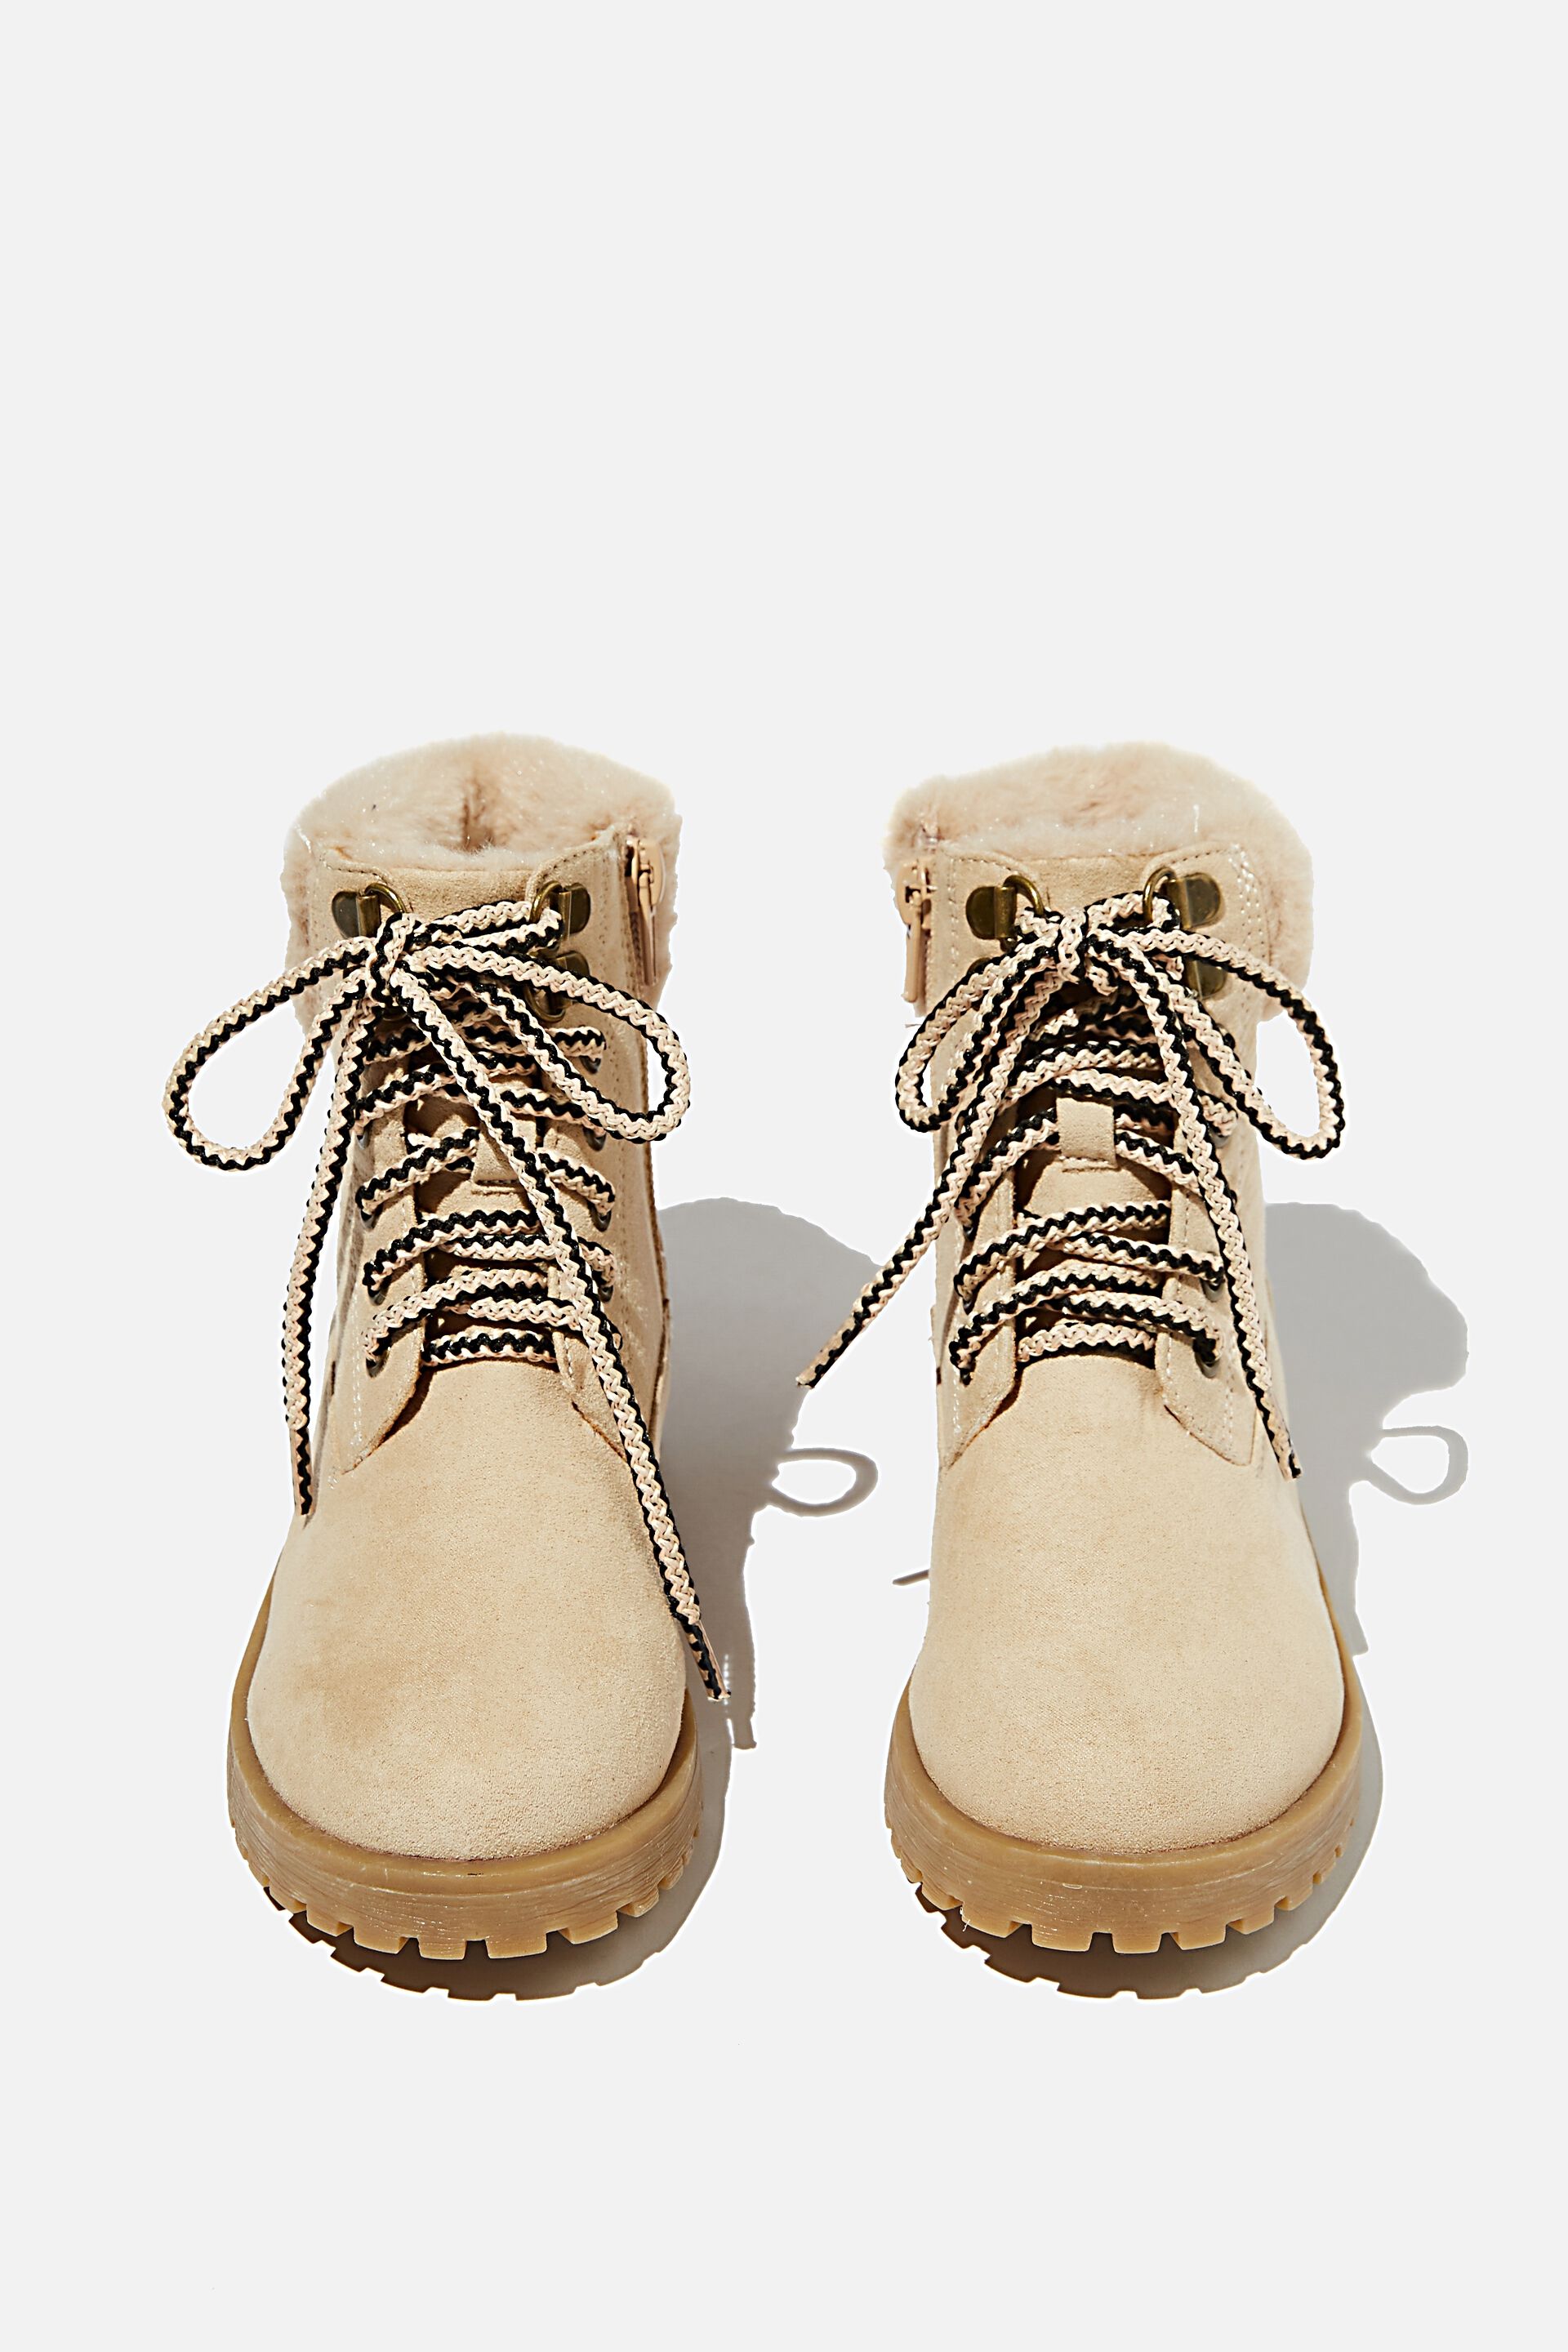 cotton on kids boots